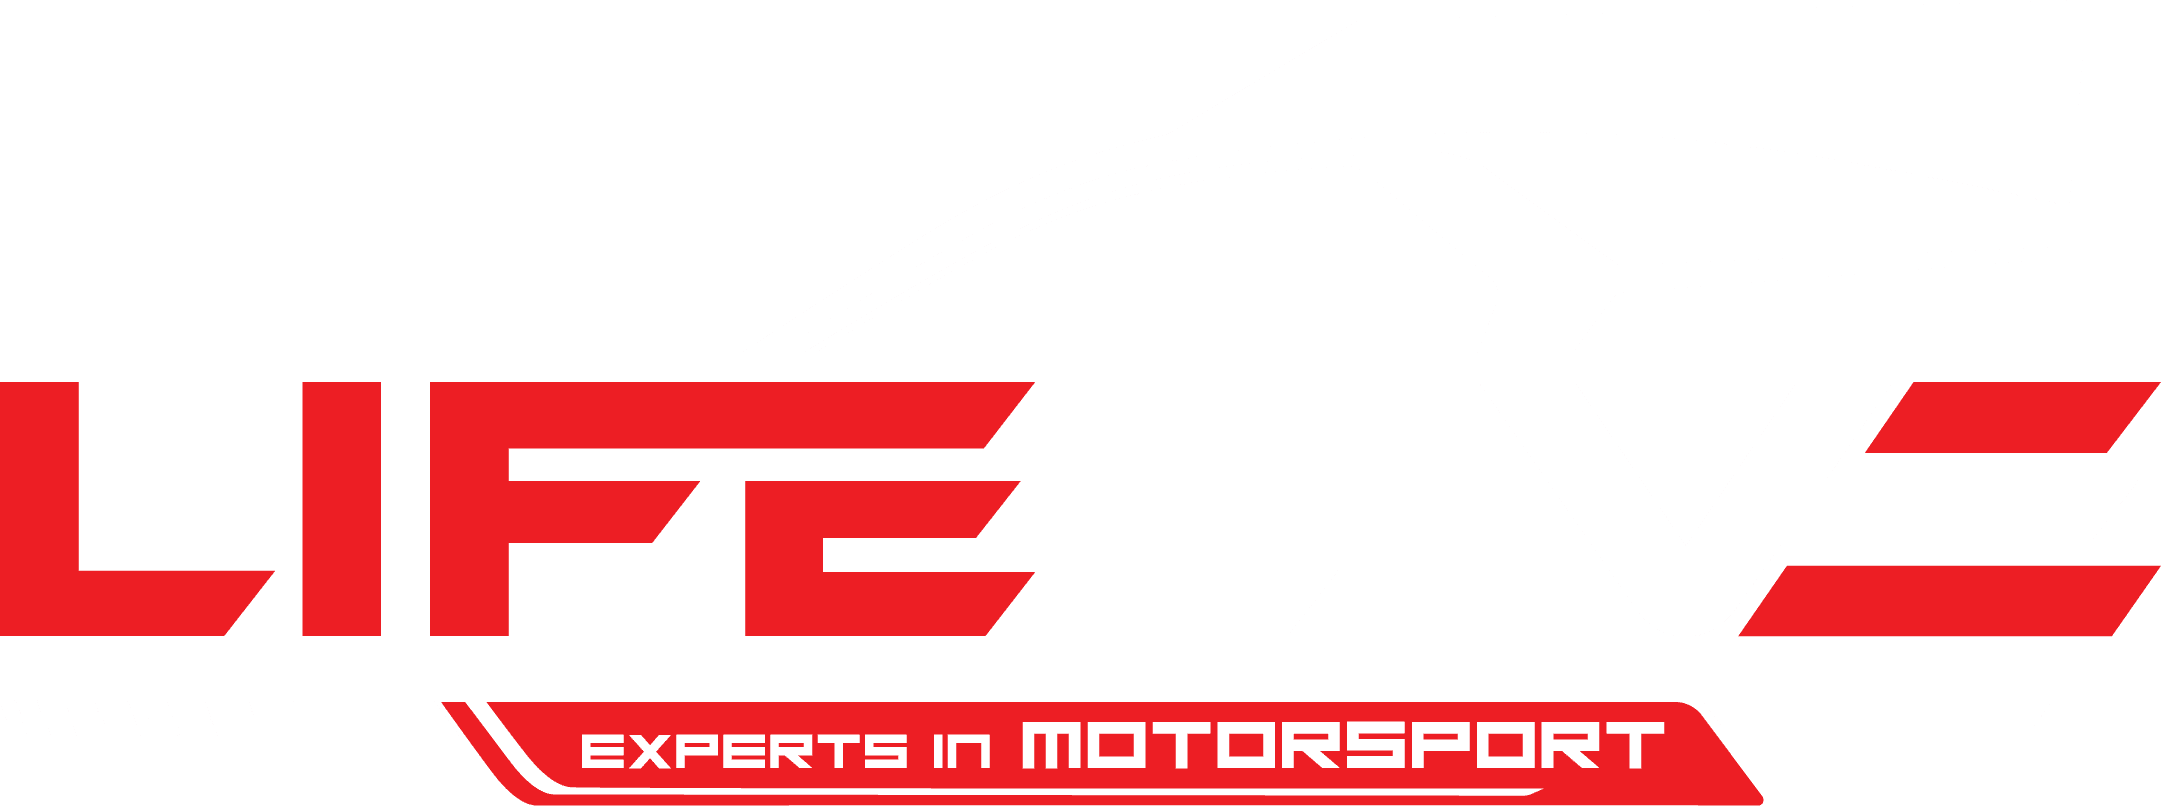 LIFELIVE Experts in Motorsport WHITE logo